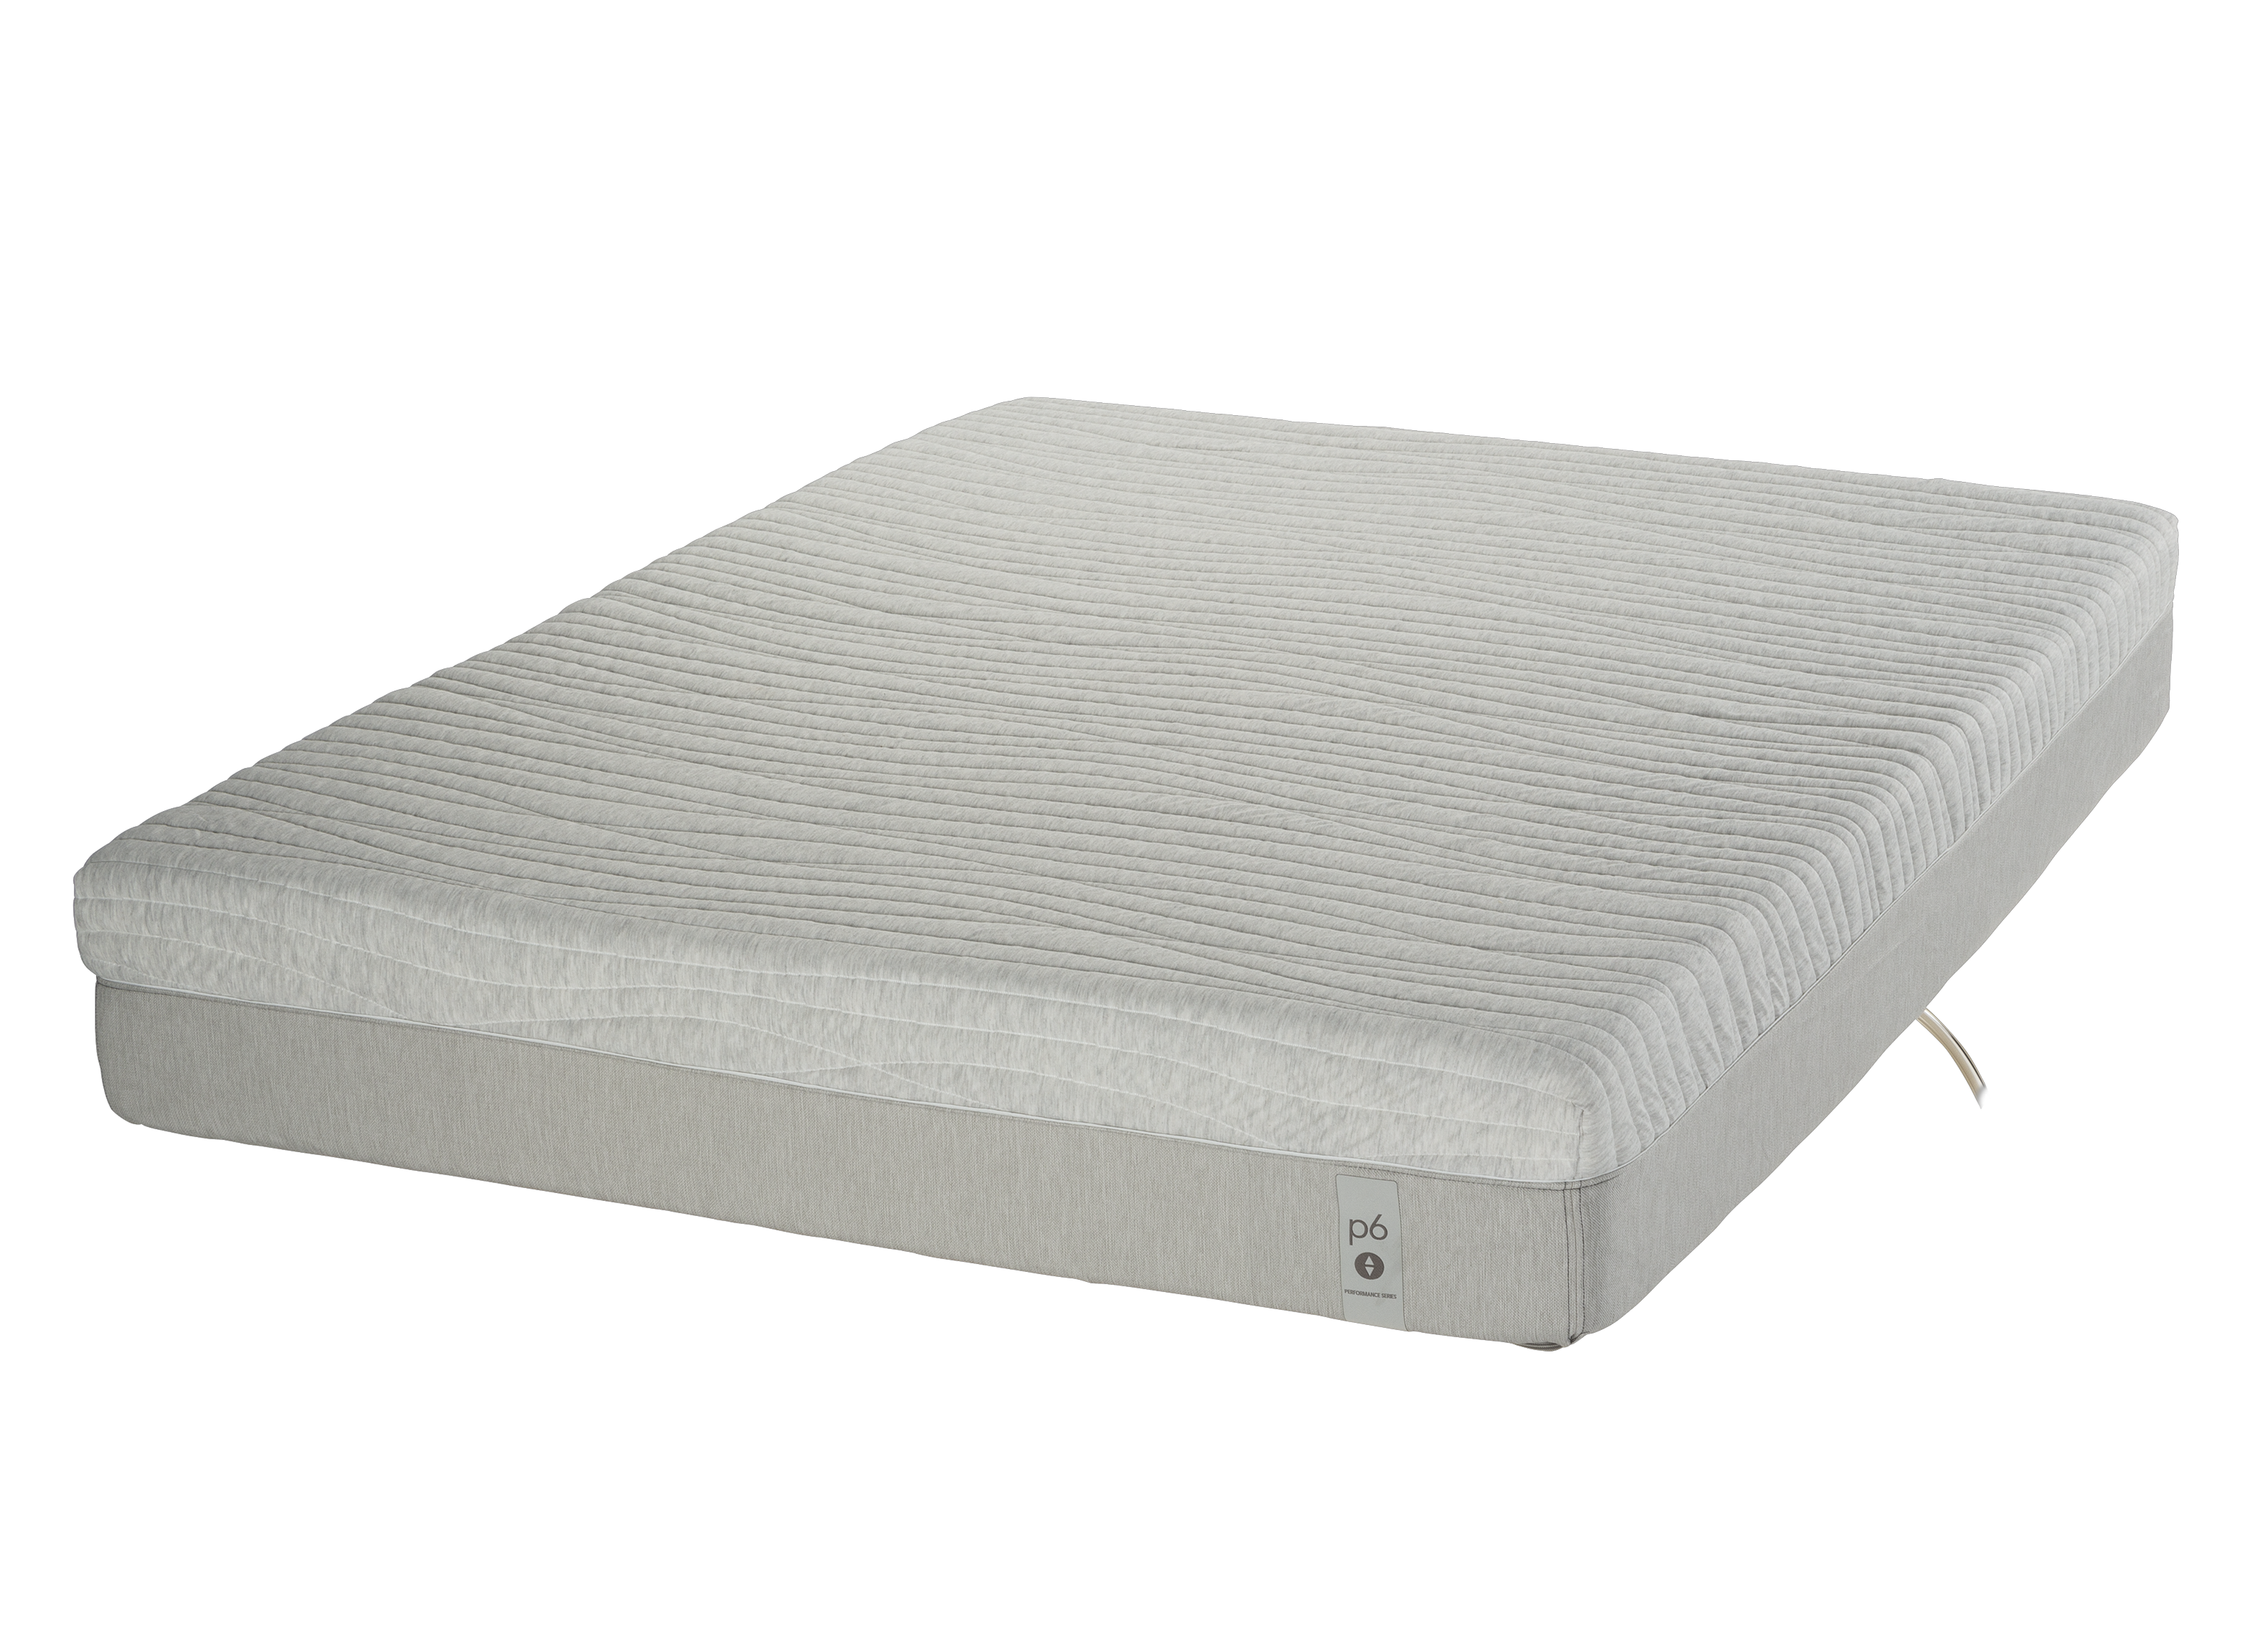 Sleep Number 360 P6 Smart Bed Mattress, How Do I Reset My Sleep Number Bed